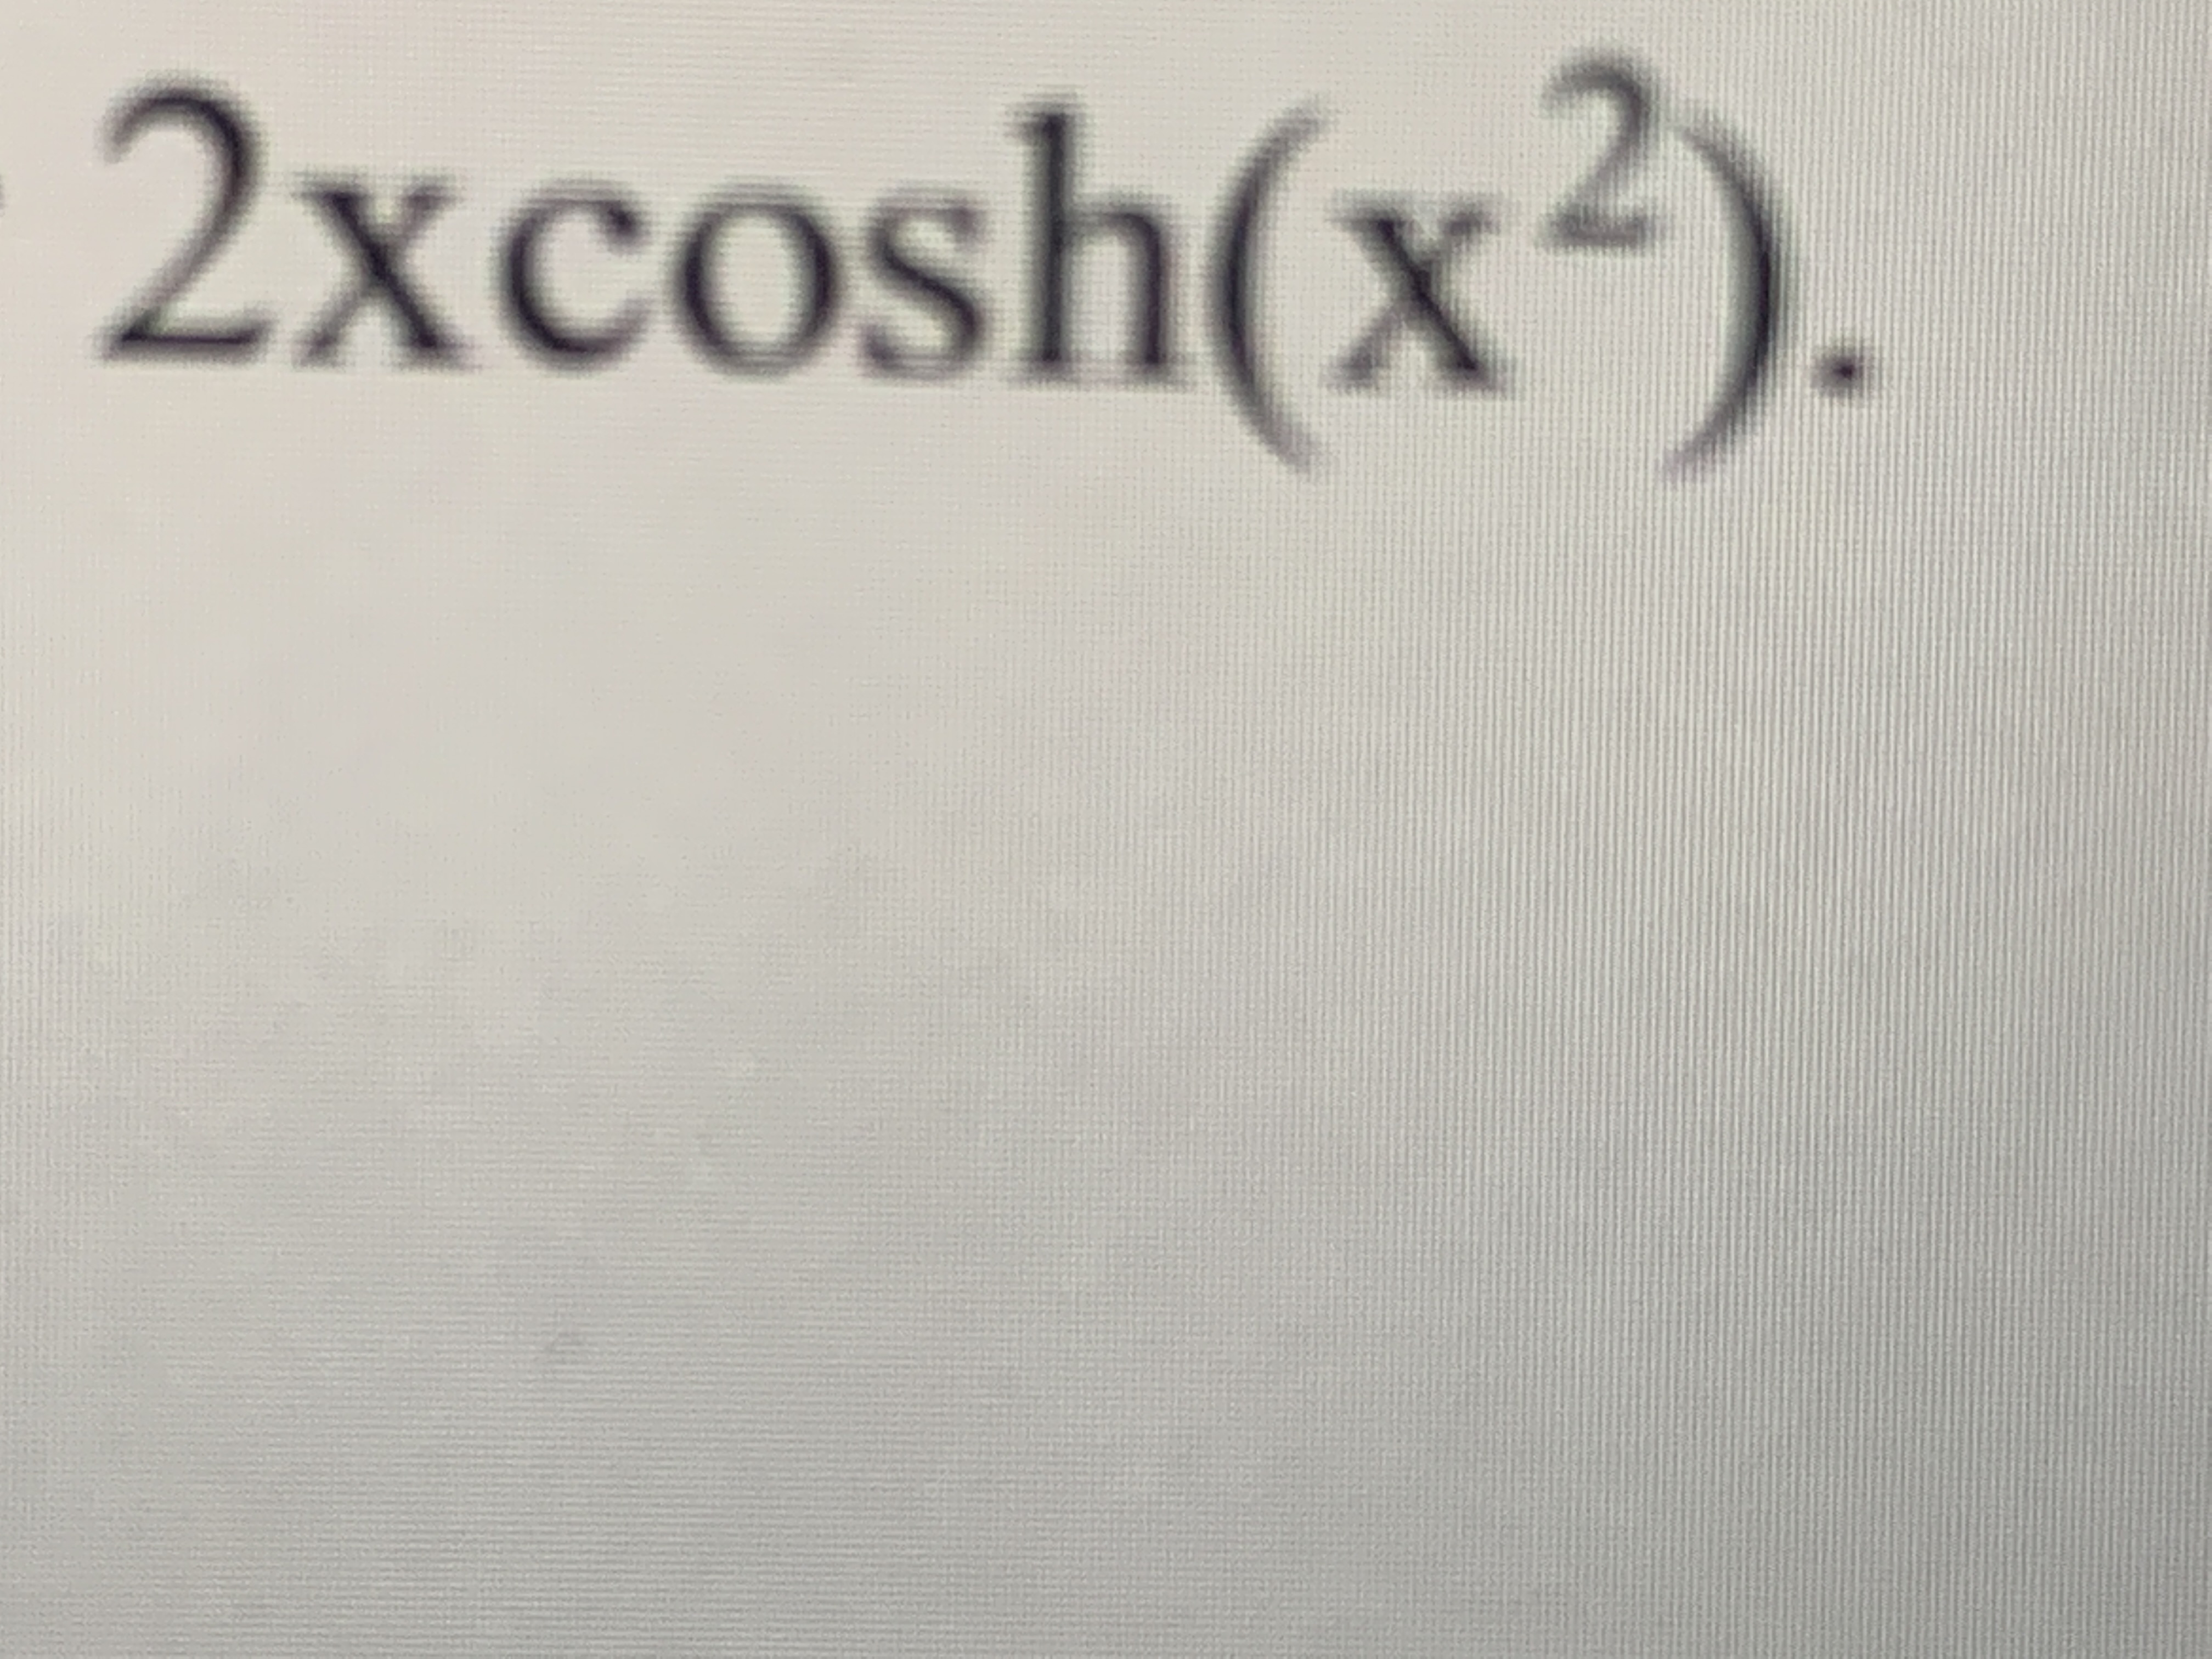 2xcosh(x²).
